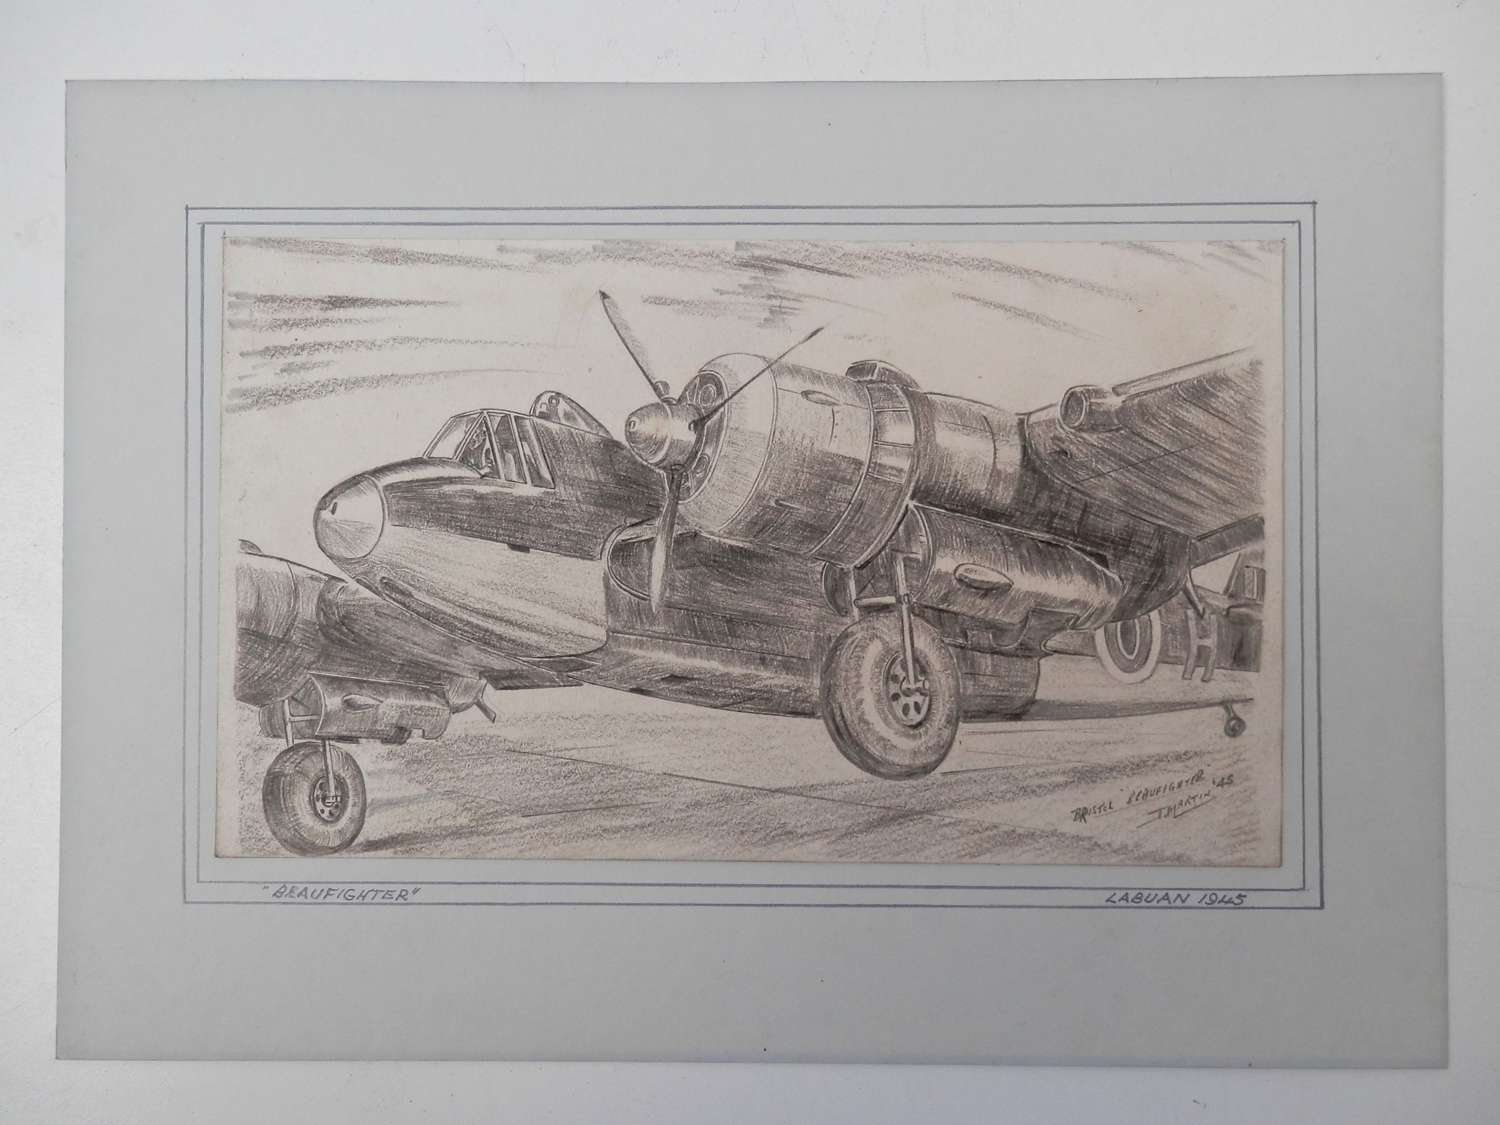 Original wartime drawing of a Beaufighter